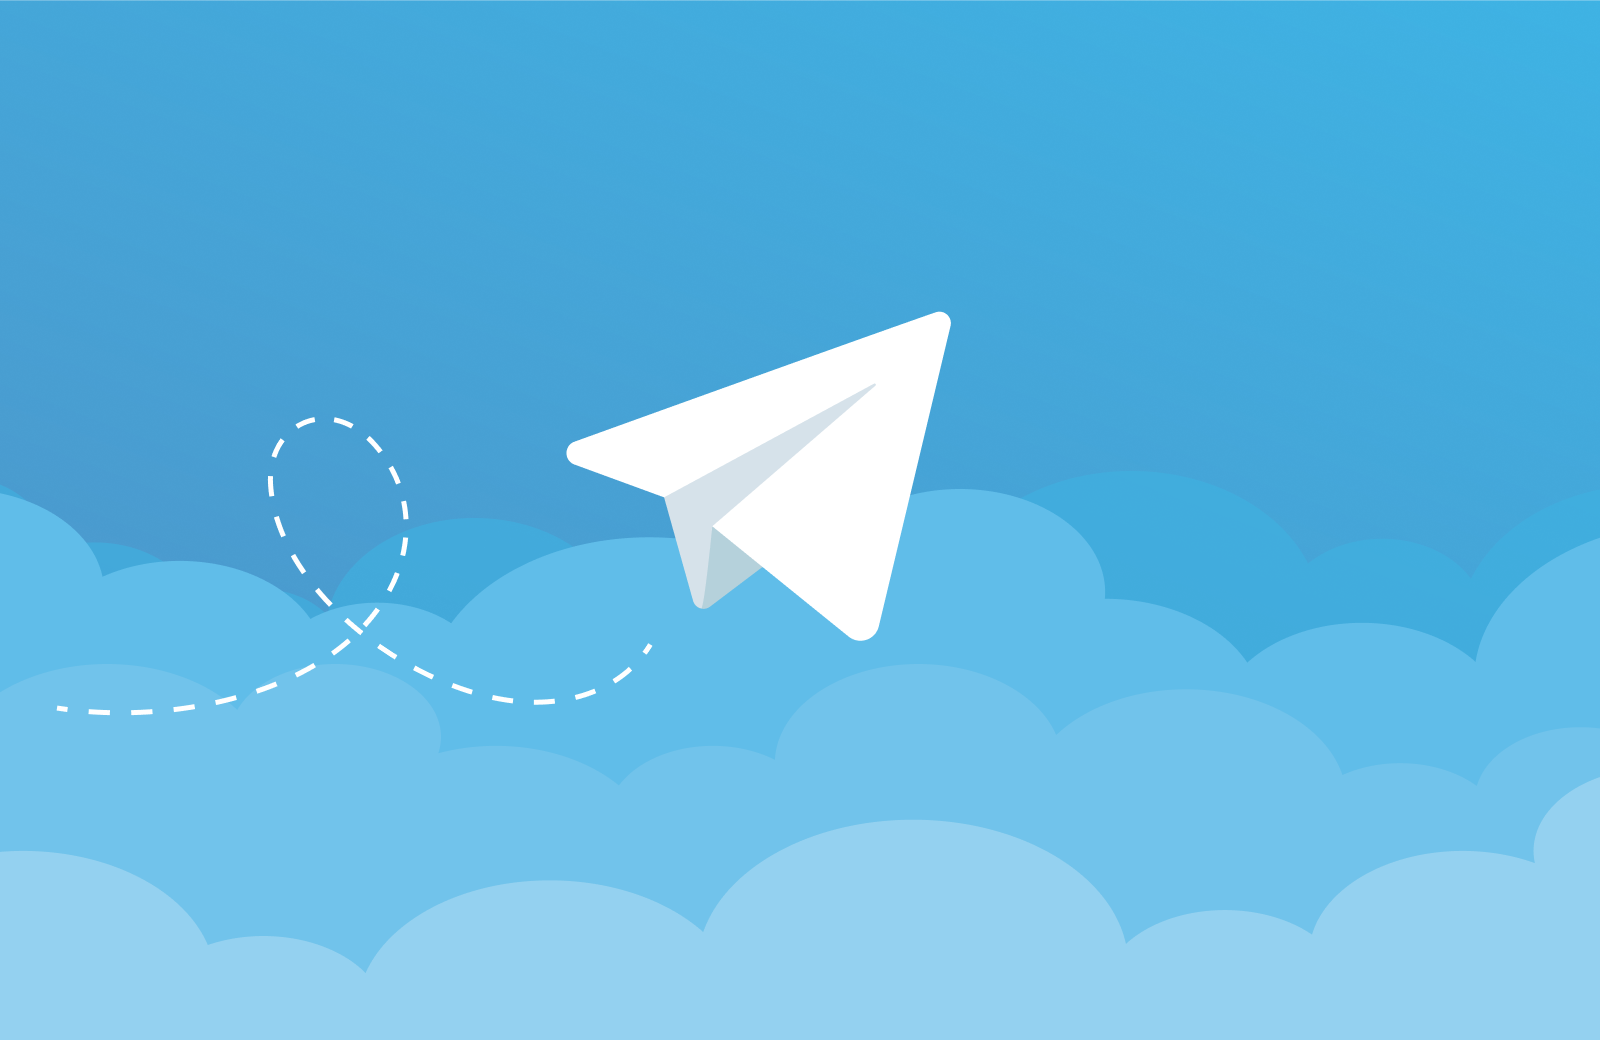 Telegram business